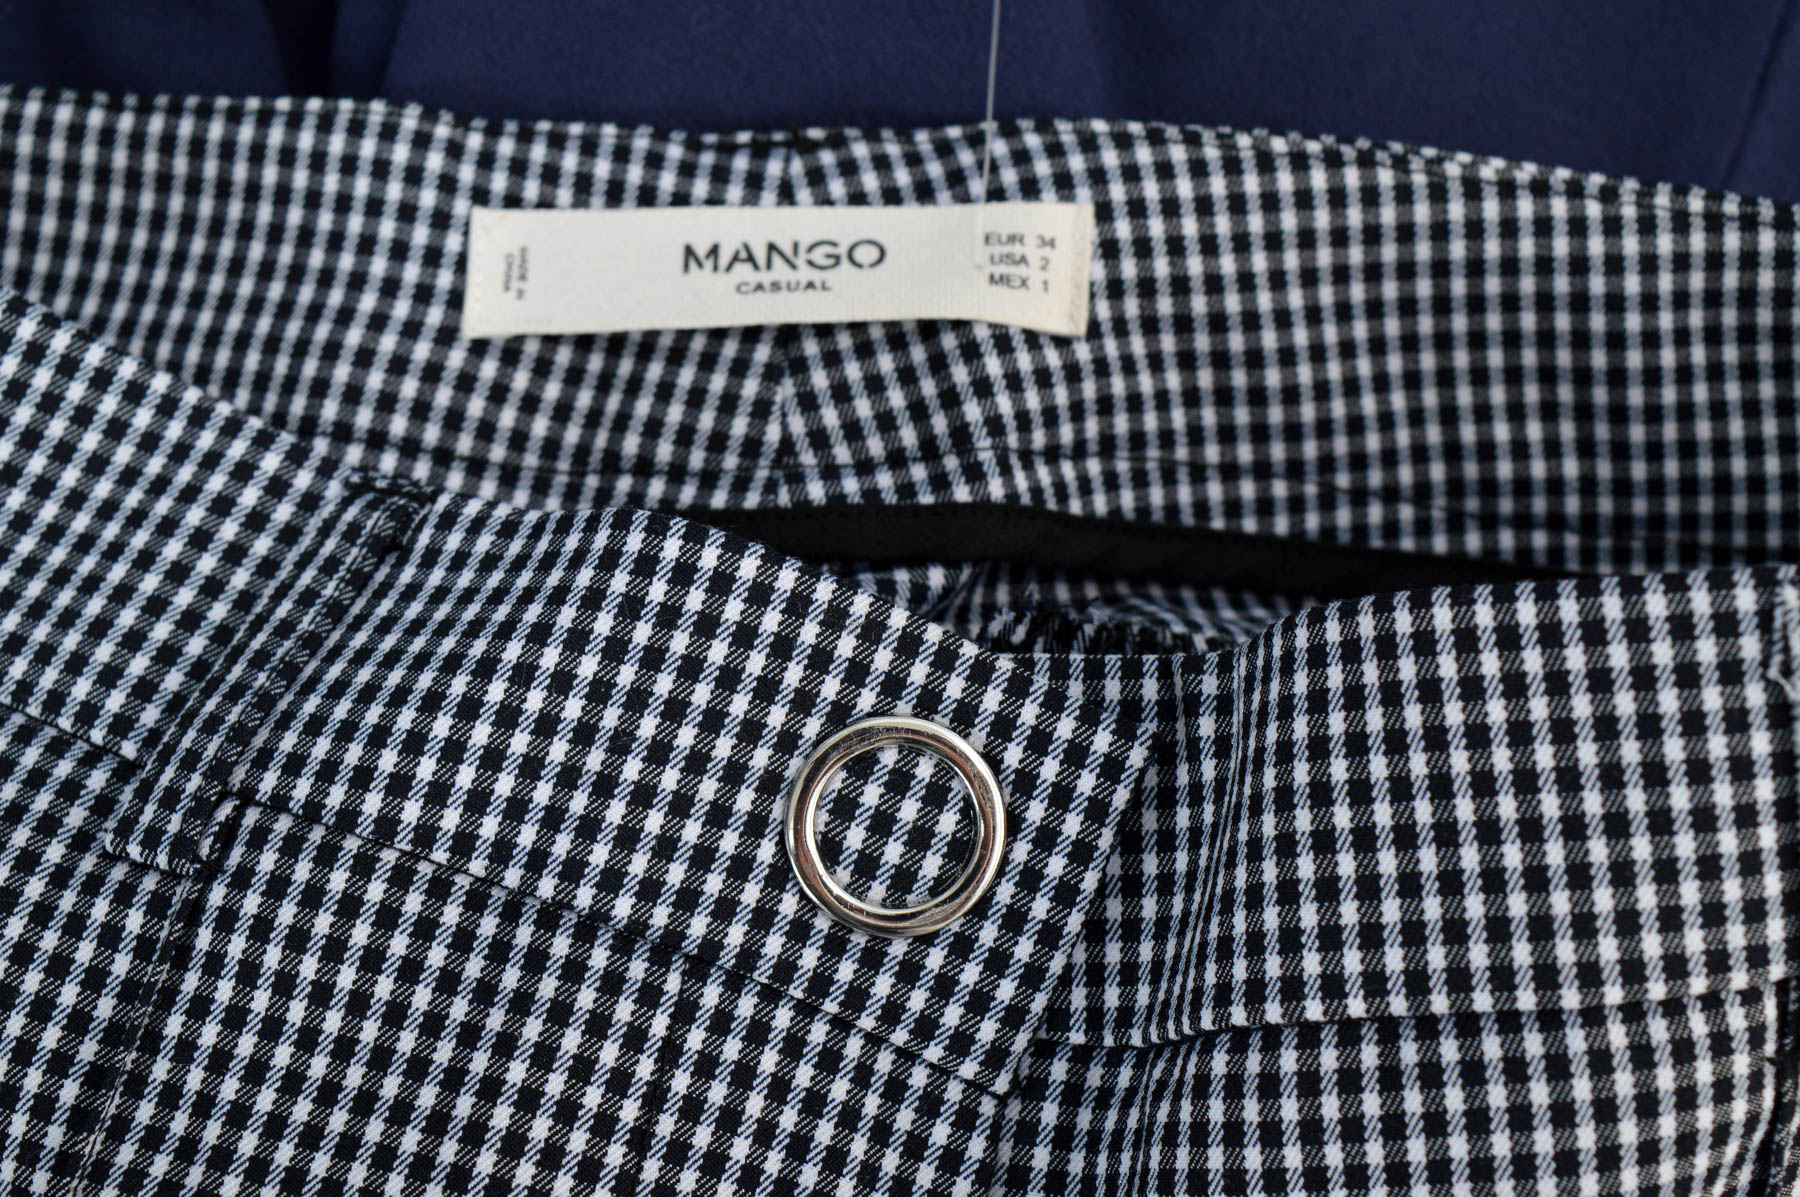 Women's trousers - MANGO BASICS - 2